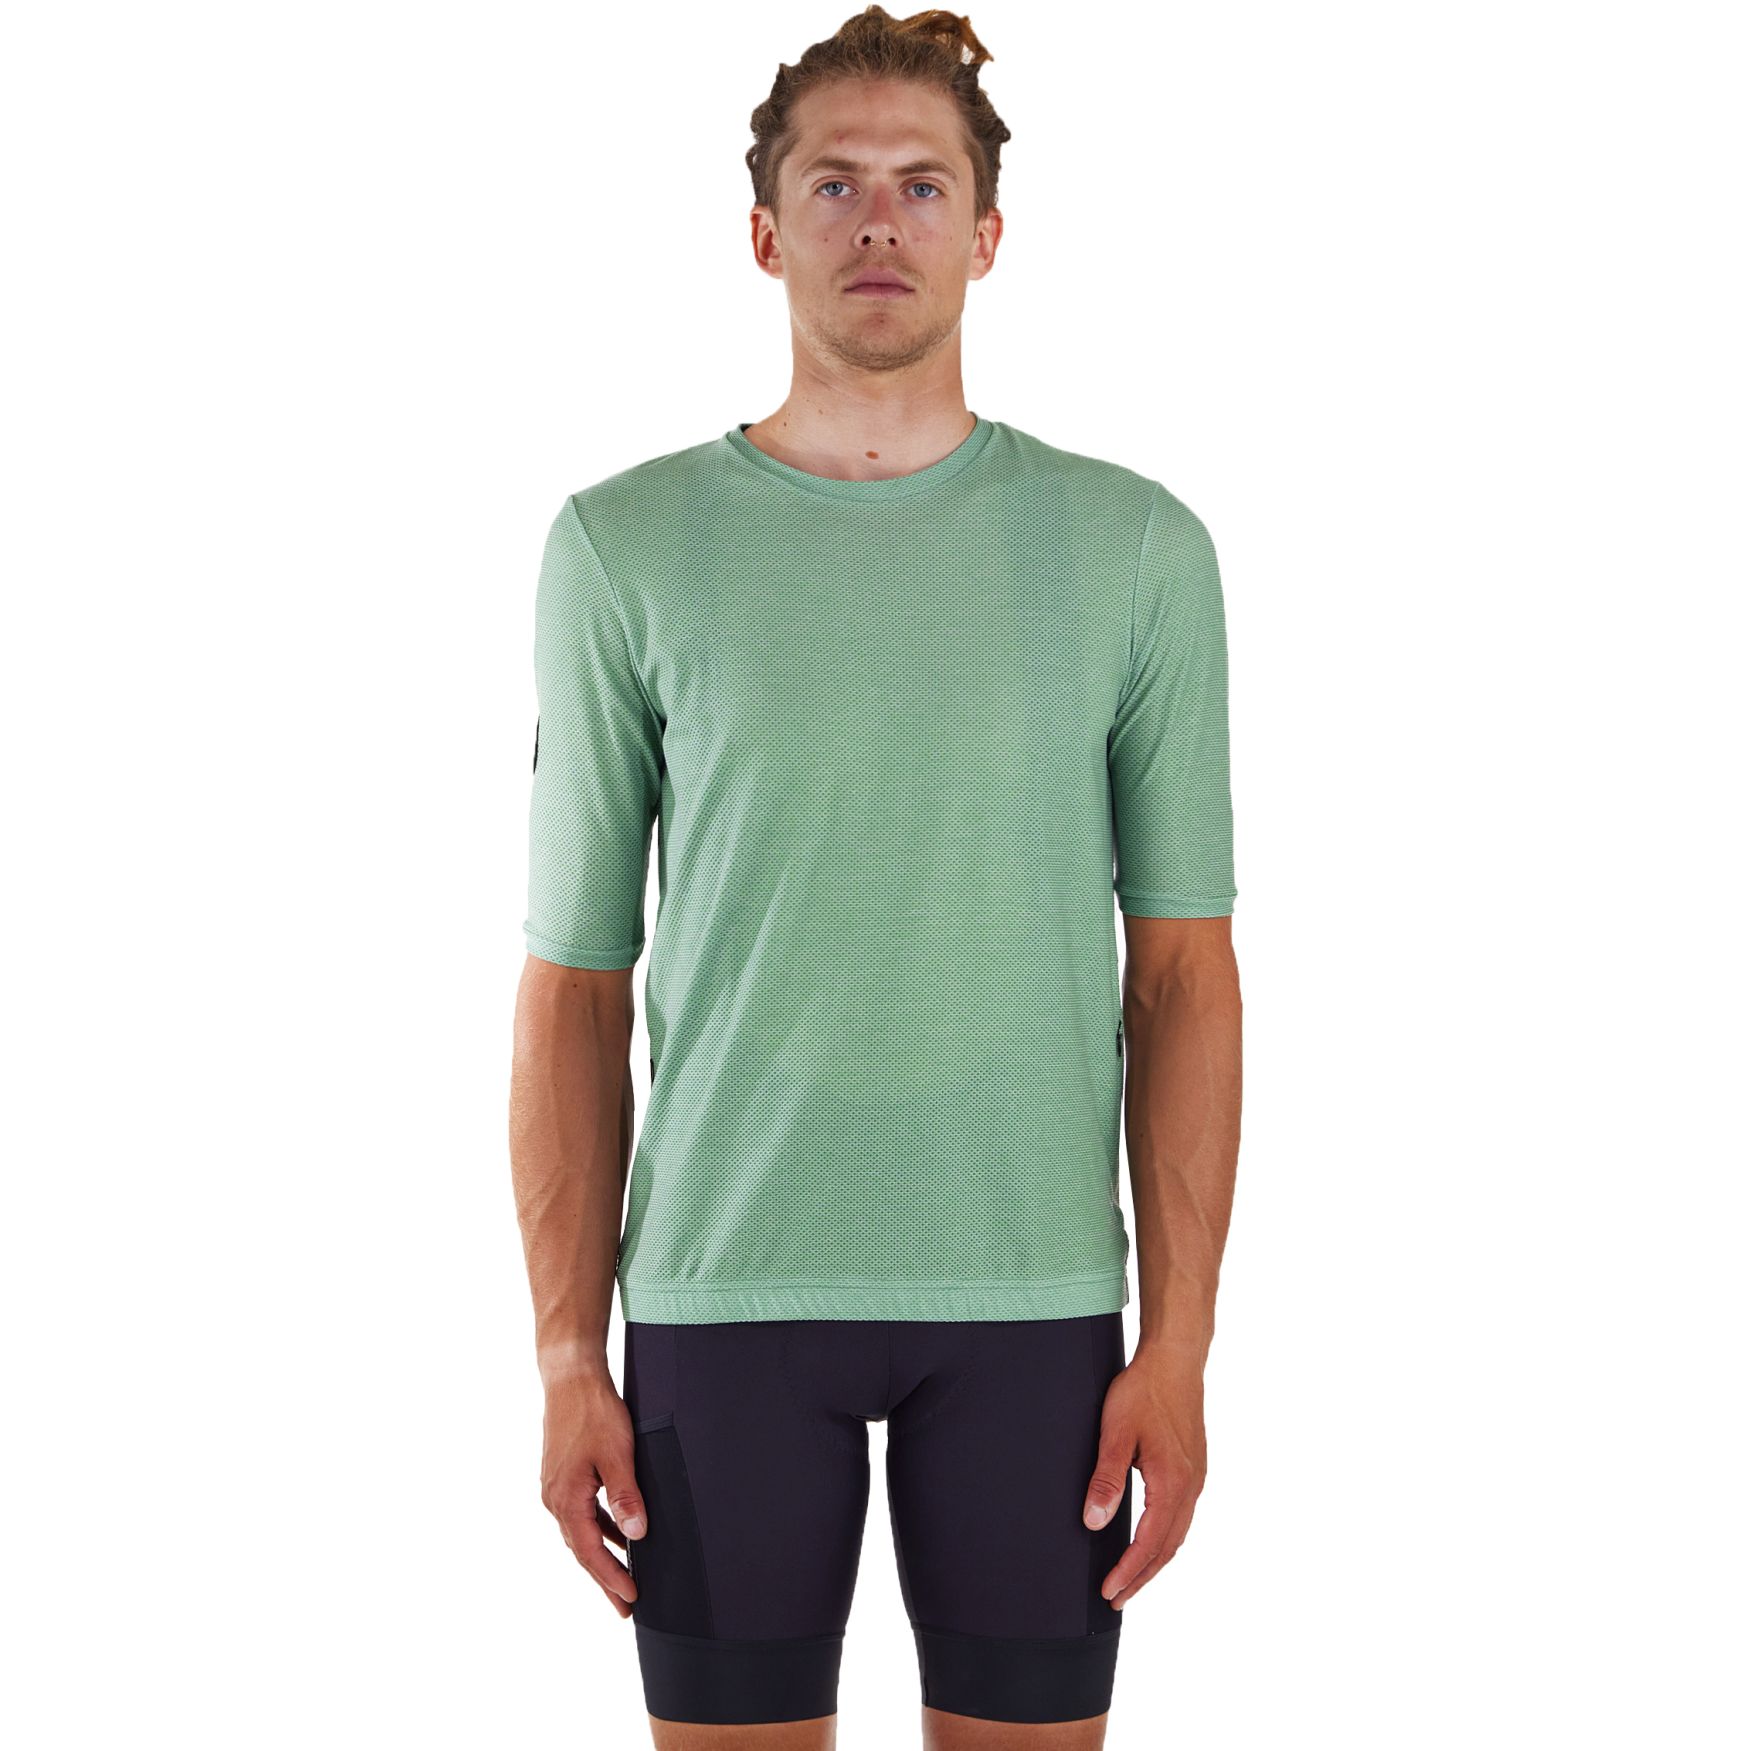 Picture of Santini Stone Delta Tech T-Shirt Men 4M499GLLSTONEDELT - green military VM